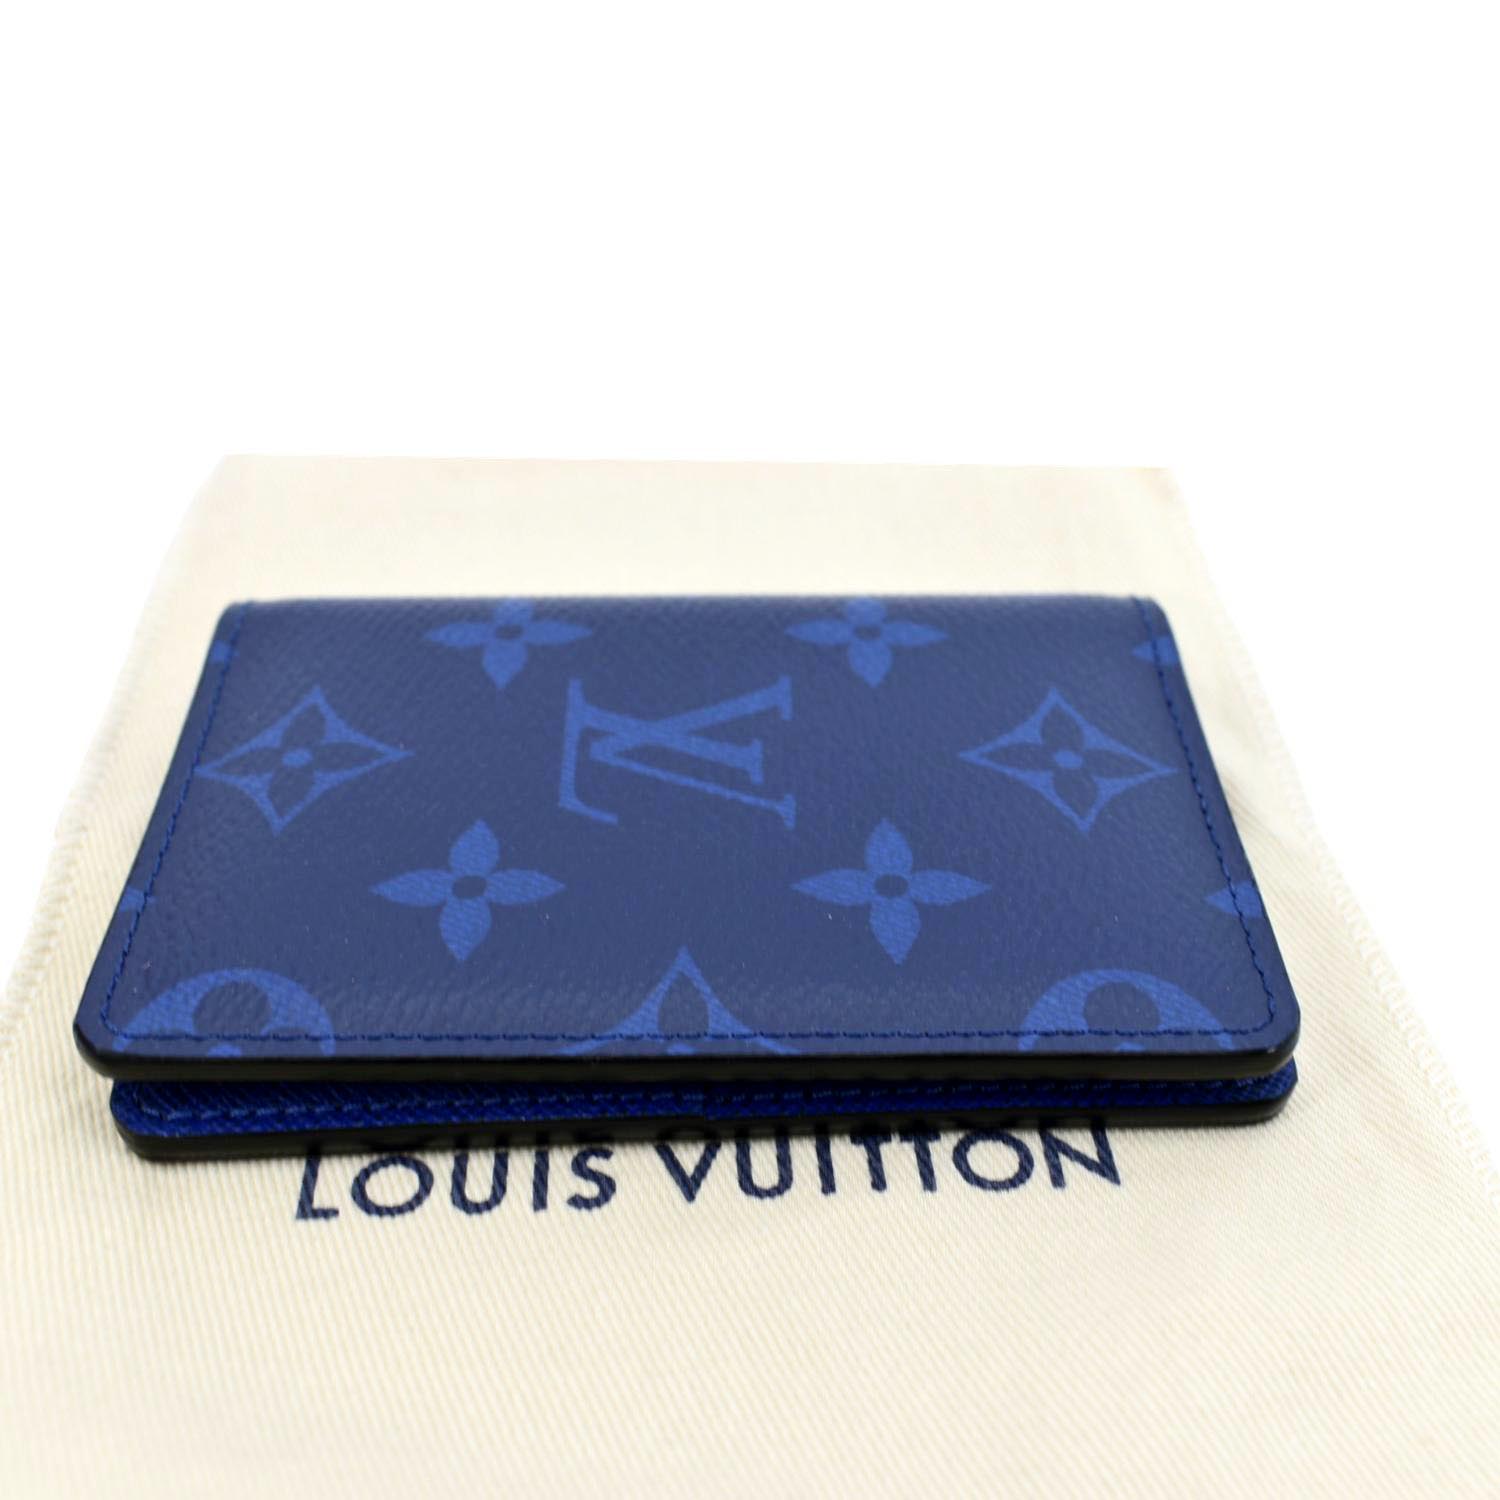 Louis Vuitton Pocket Organizer Monogram Shadow Navy Blue